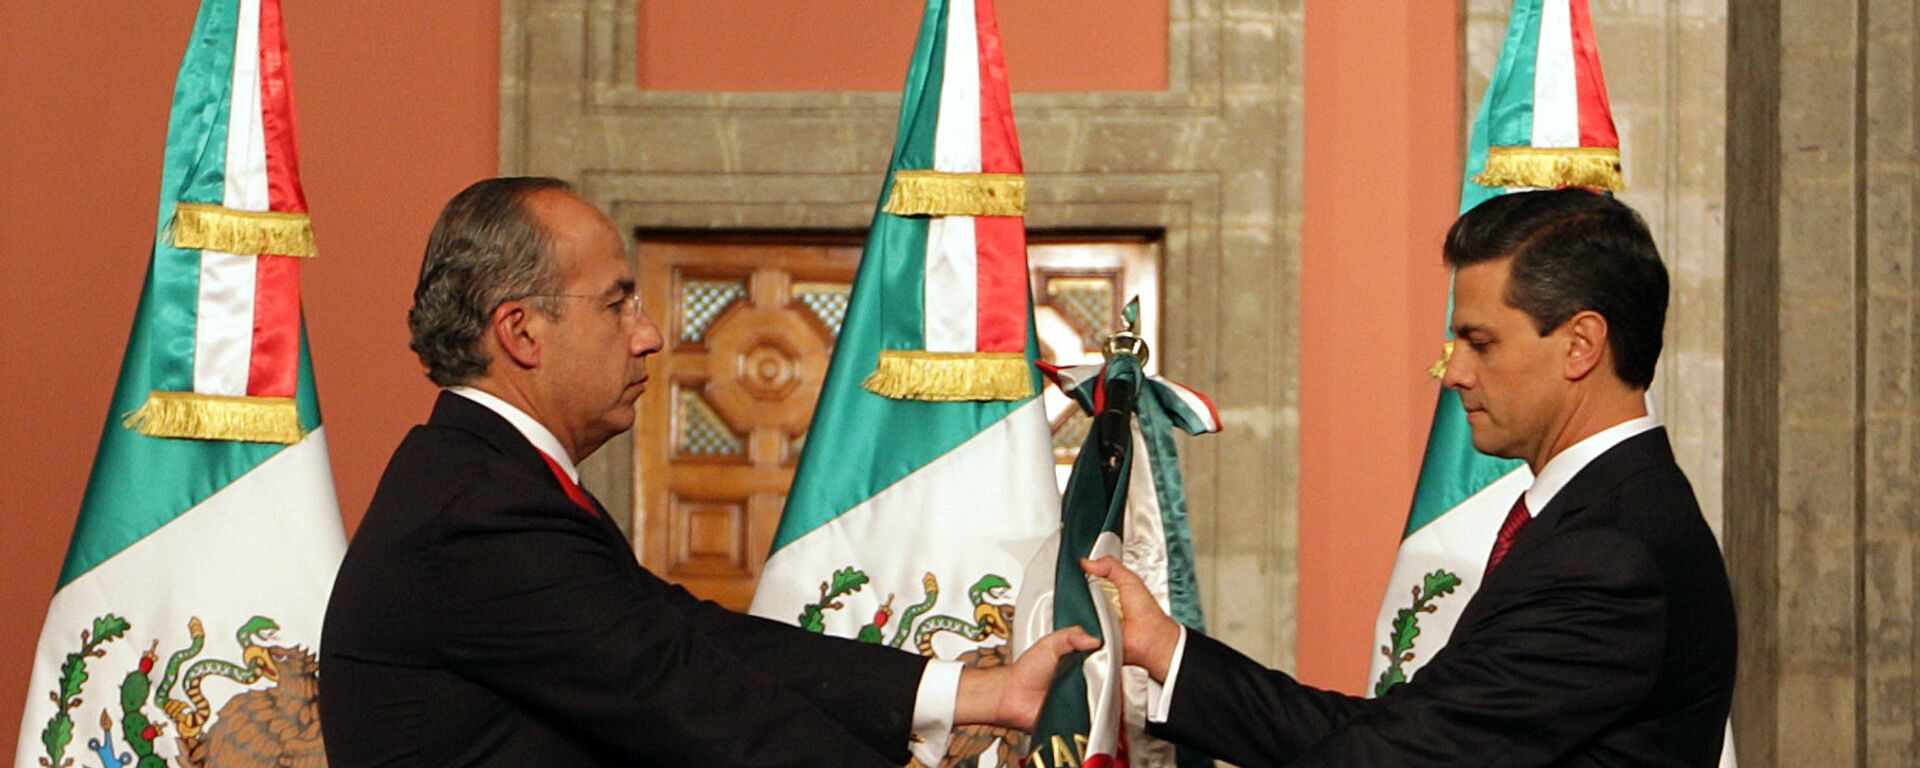 Felipe Calderón y Enrique Peña Nieto, expresidentes de México - Sputnik Mundo, 1920, 27.10.2020